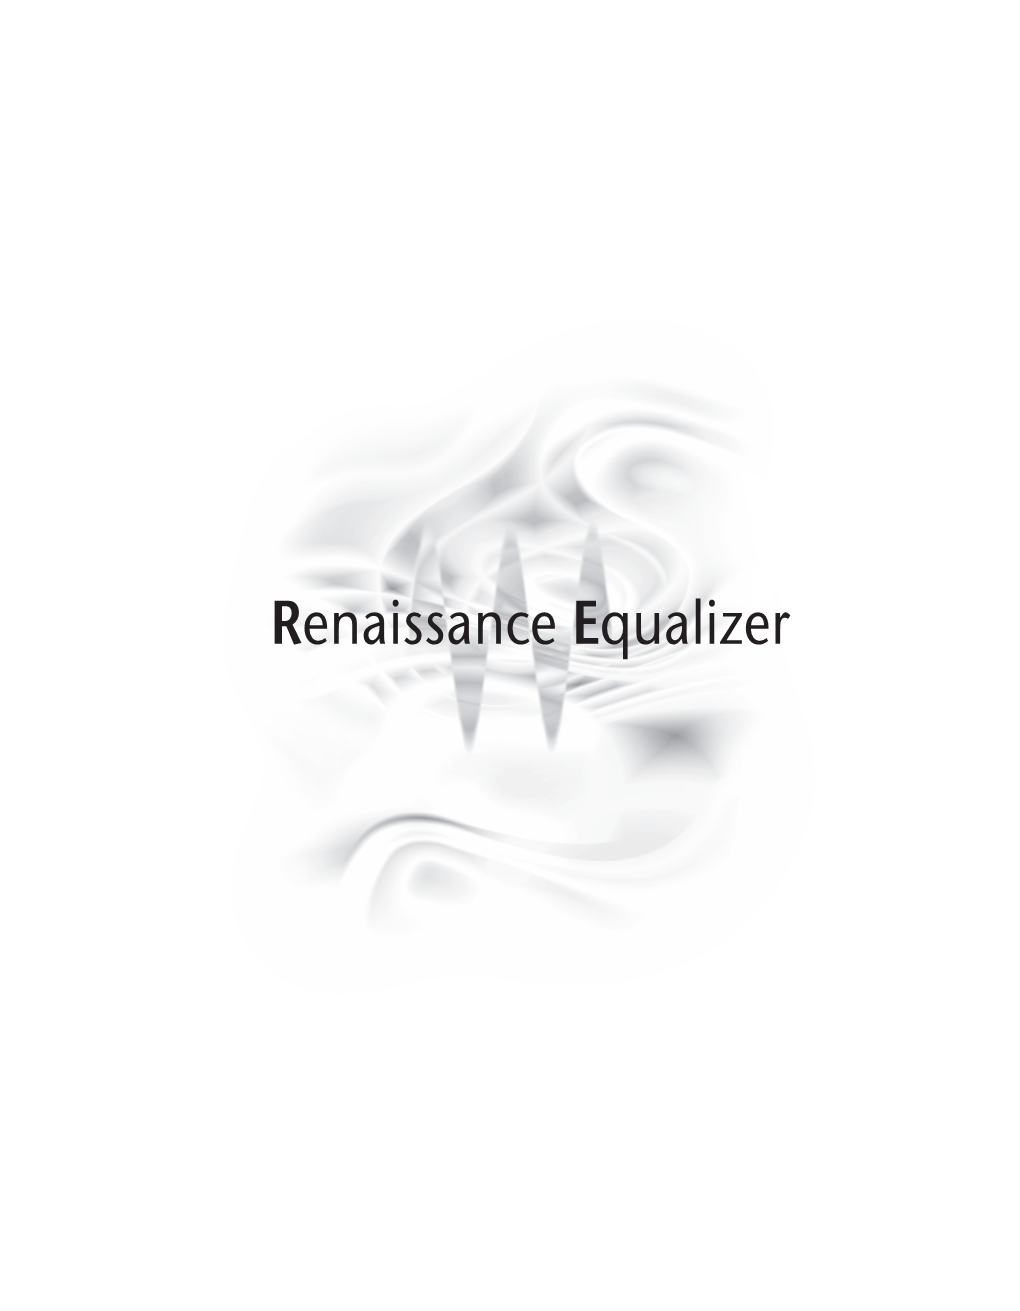 Renaissance Equalizer Table of Contents